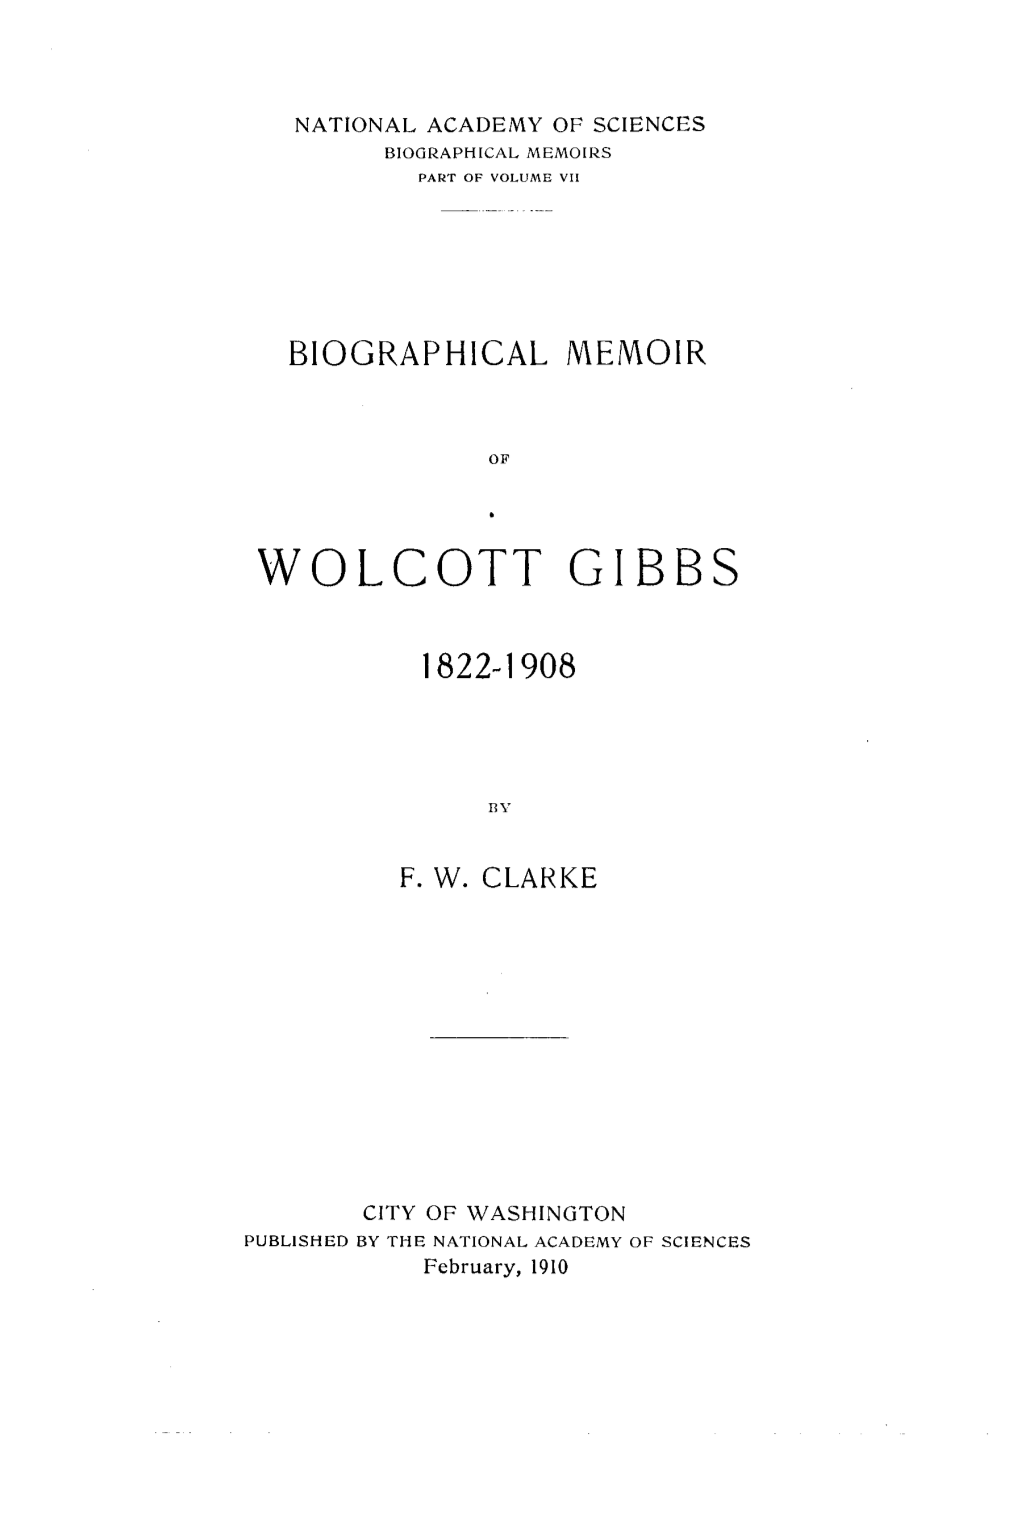 Wolcott Gibbs